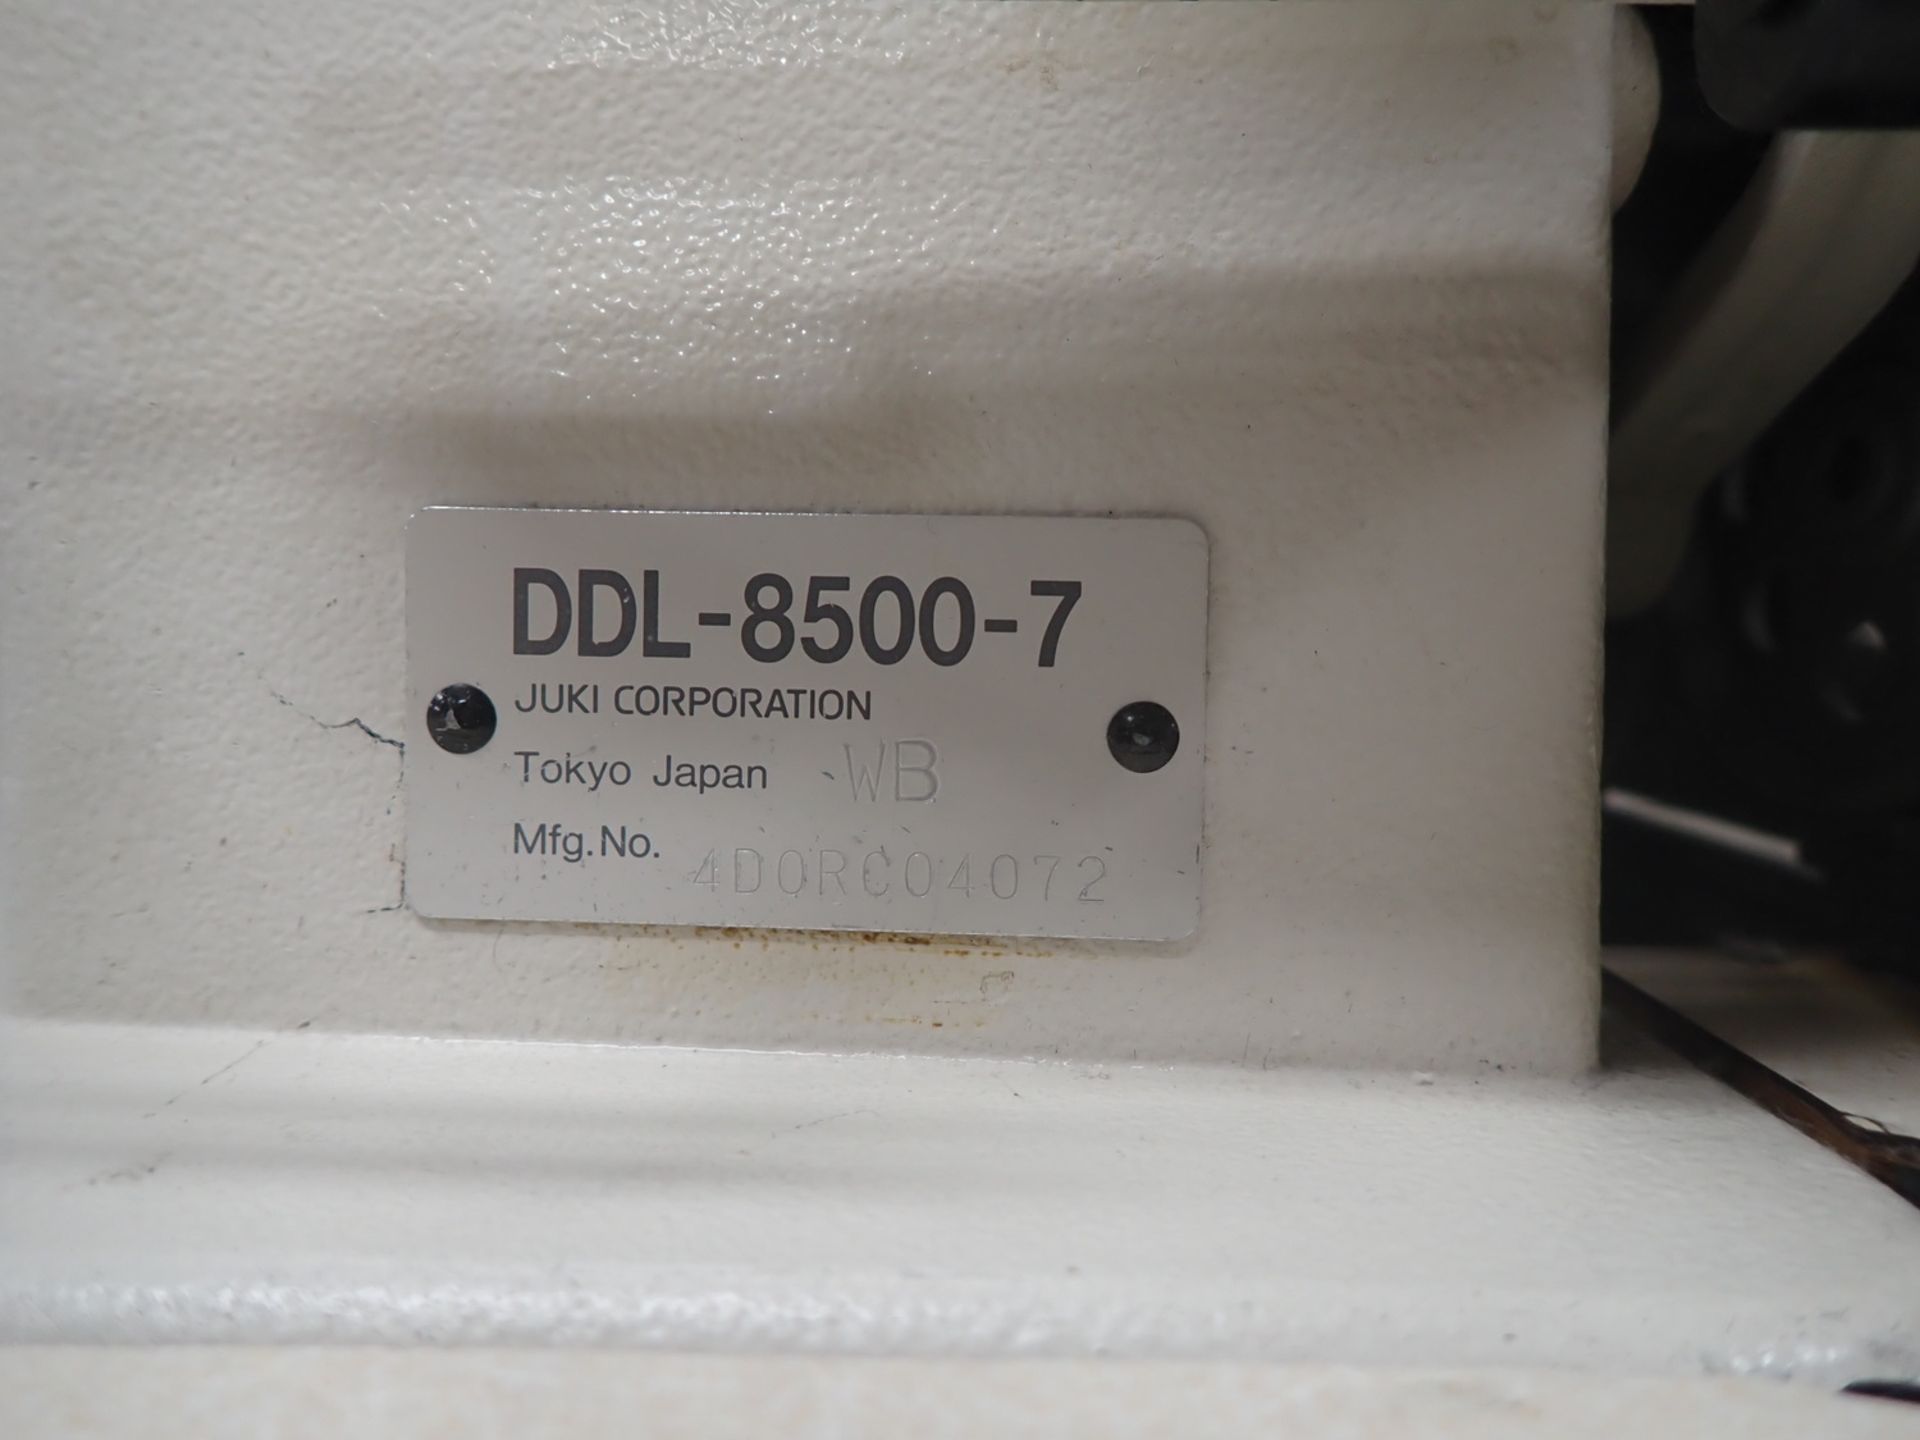 JUKI DDL8500-7 SINGLE NEEDLE MACHINE, S/N 4DORCO4072 W/ RACING PL PULLER (110V) - Image 2 of 9